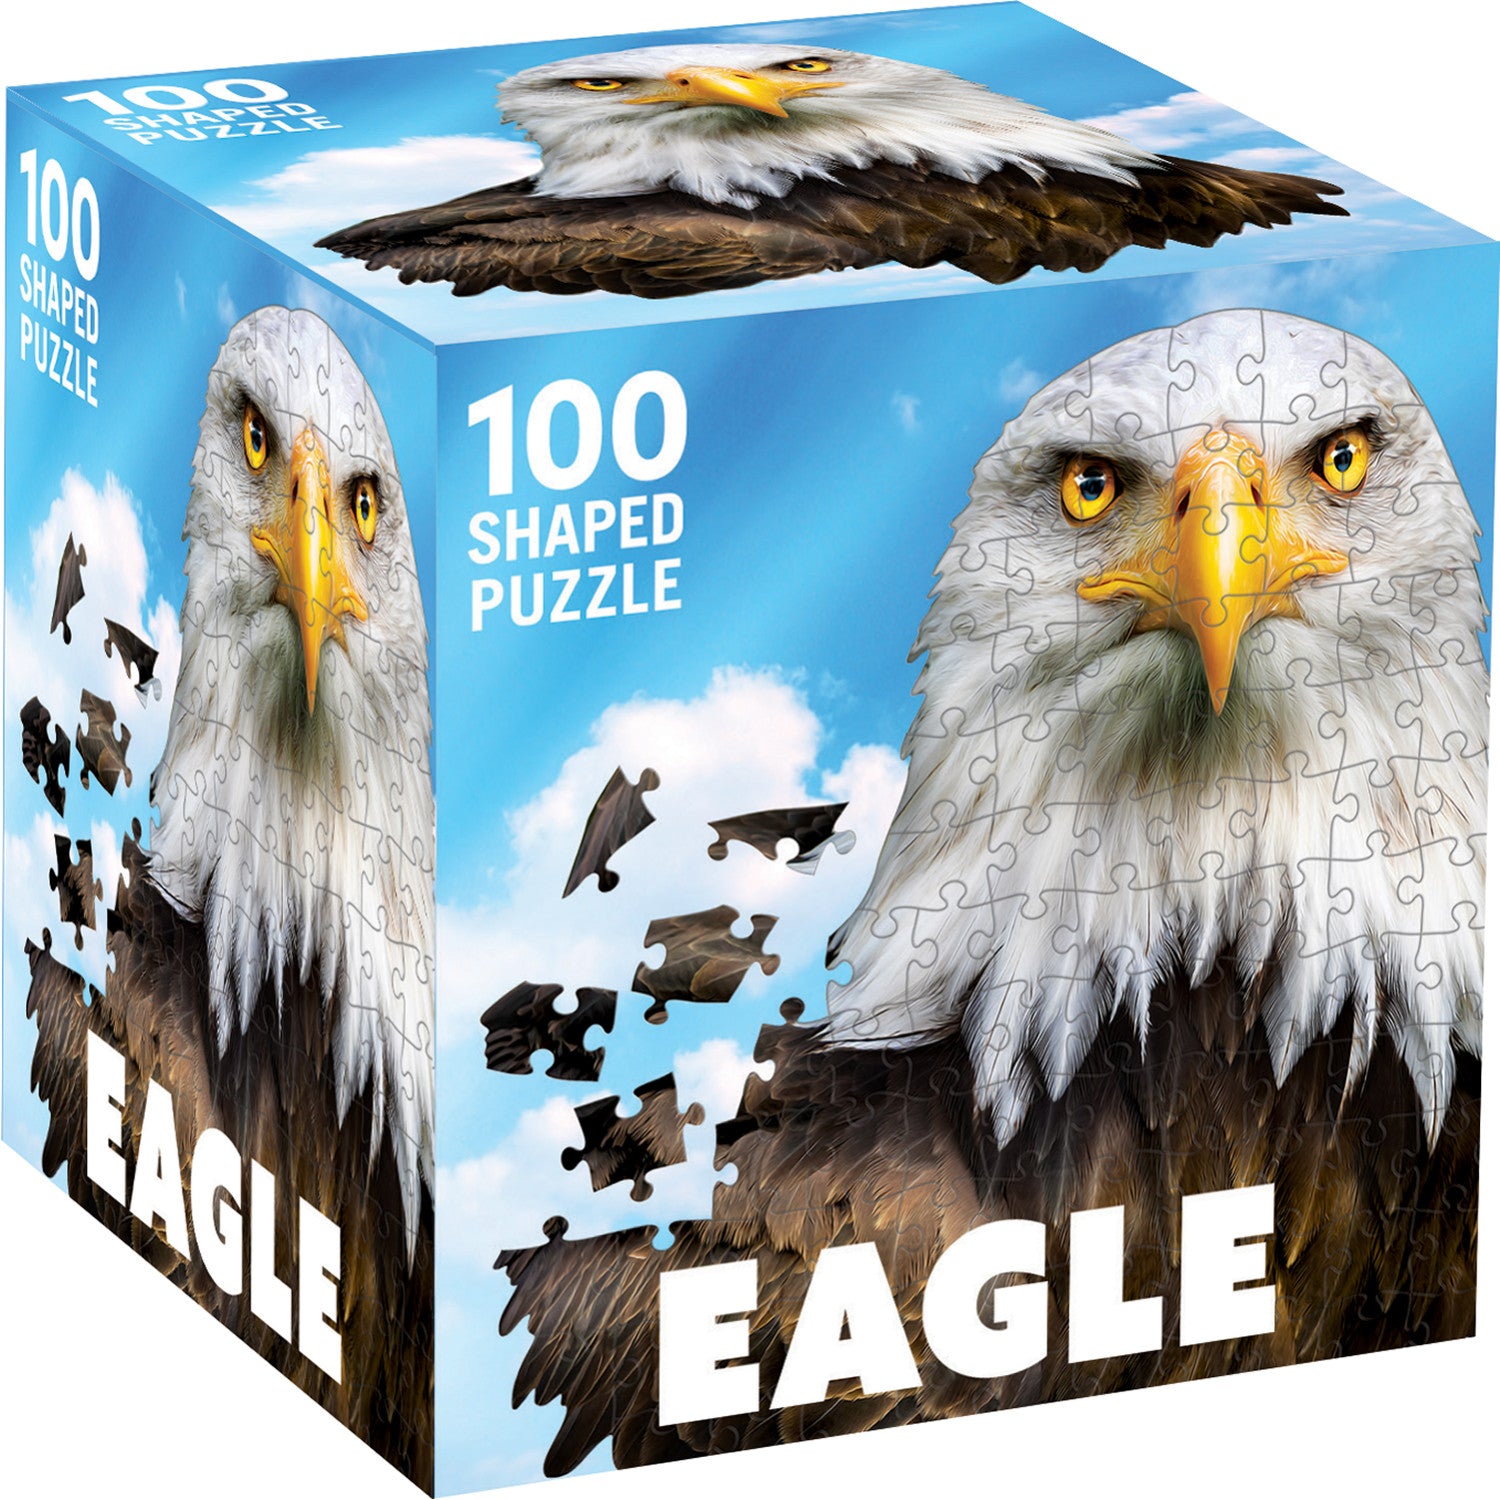 Eagle 100 Piece Shaped Jigsaw Puzzle